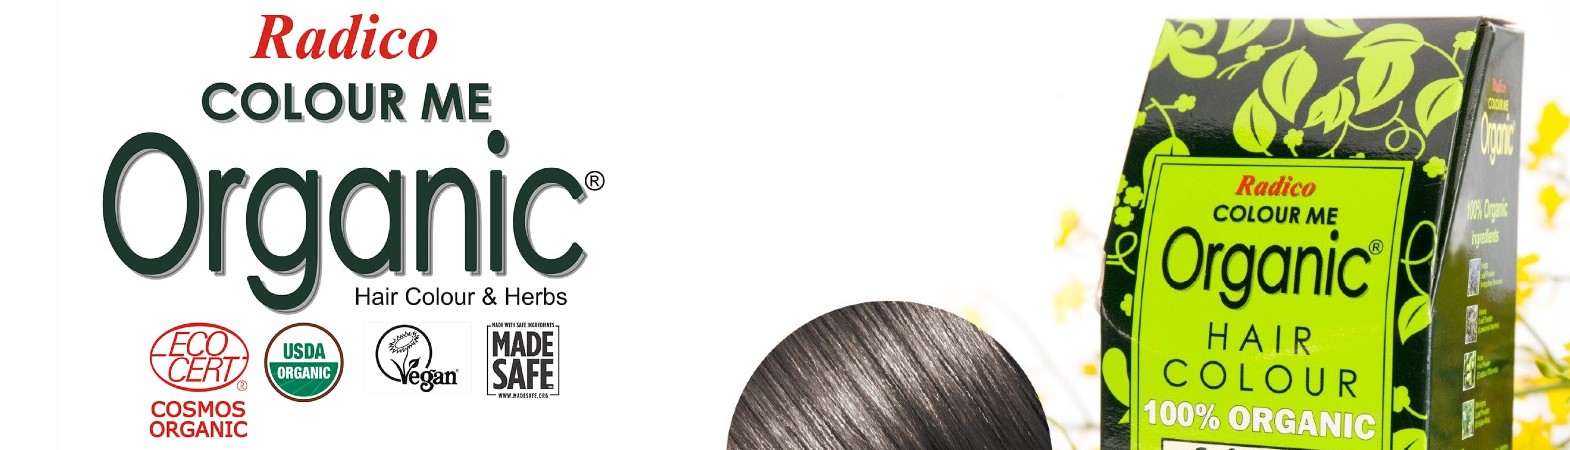 Radico Certified Organic Hair Color - Bio Hair Colors | Organic Brands